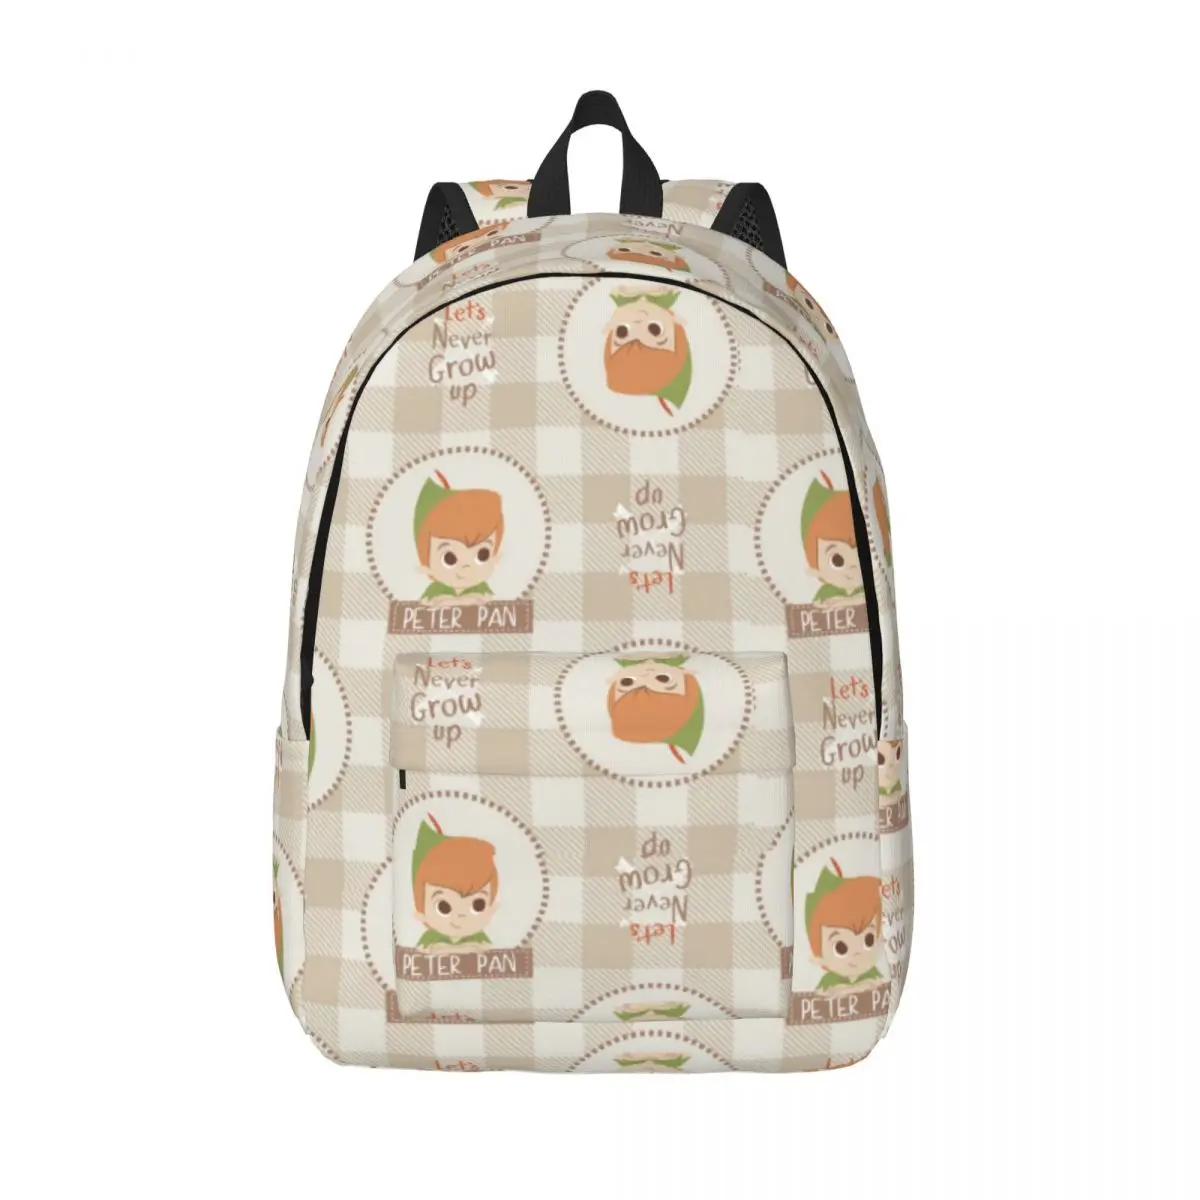 Disney Peter Pan Tinkerbell Backpack for Preschool Kindergarten School Student Bookbag Boy Girl Kids Canvas Daypack Lightweight